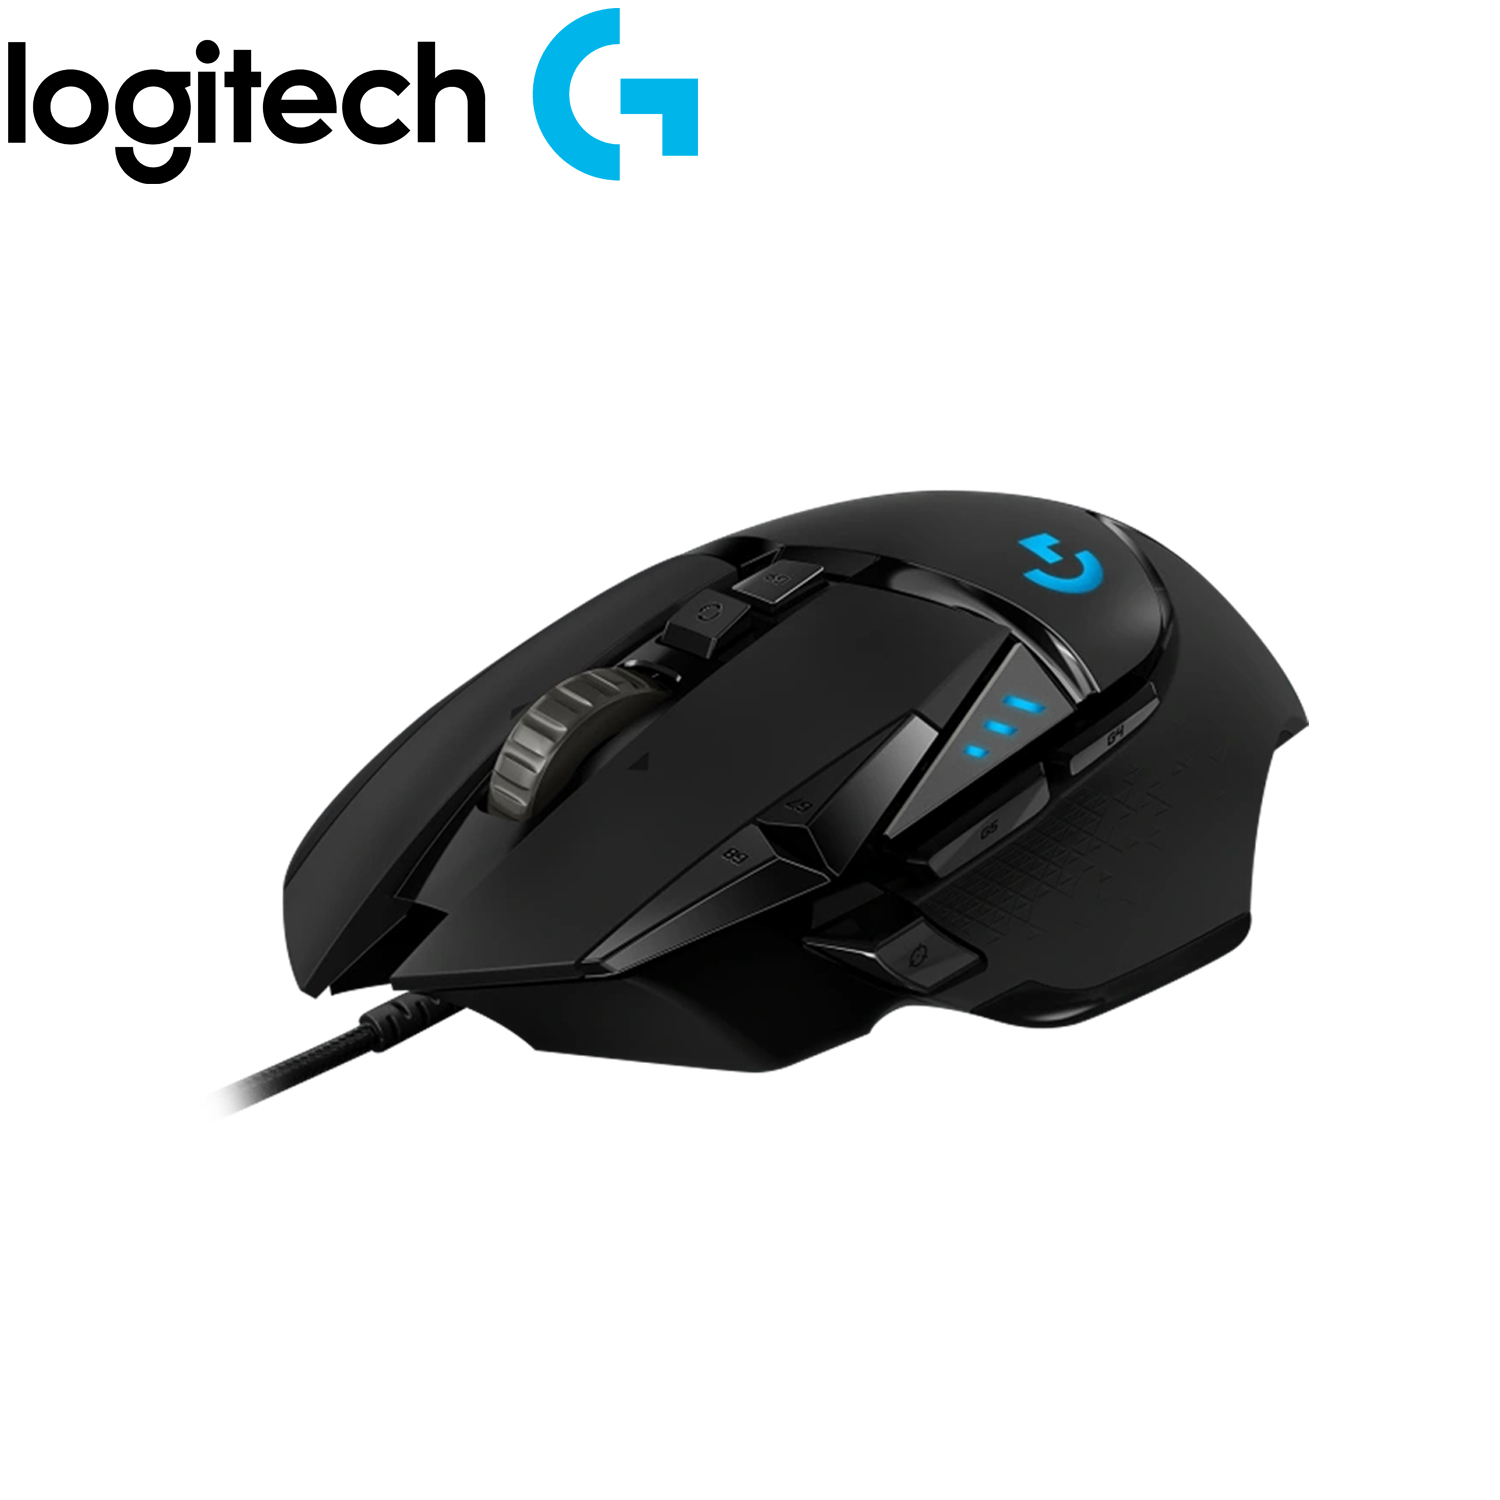 Logitech G502 Hero Gaming Mouse Gidi Distribution Corp 4103